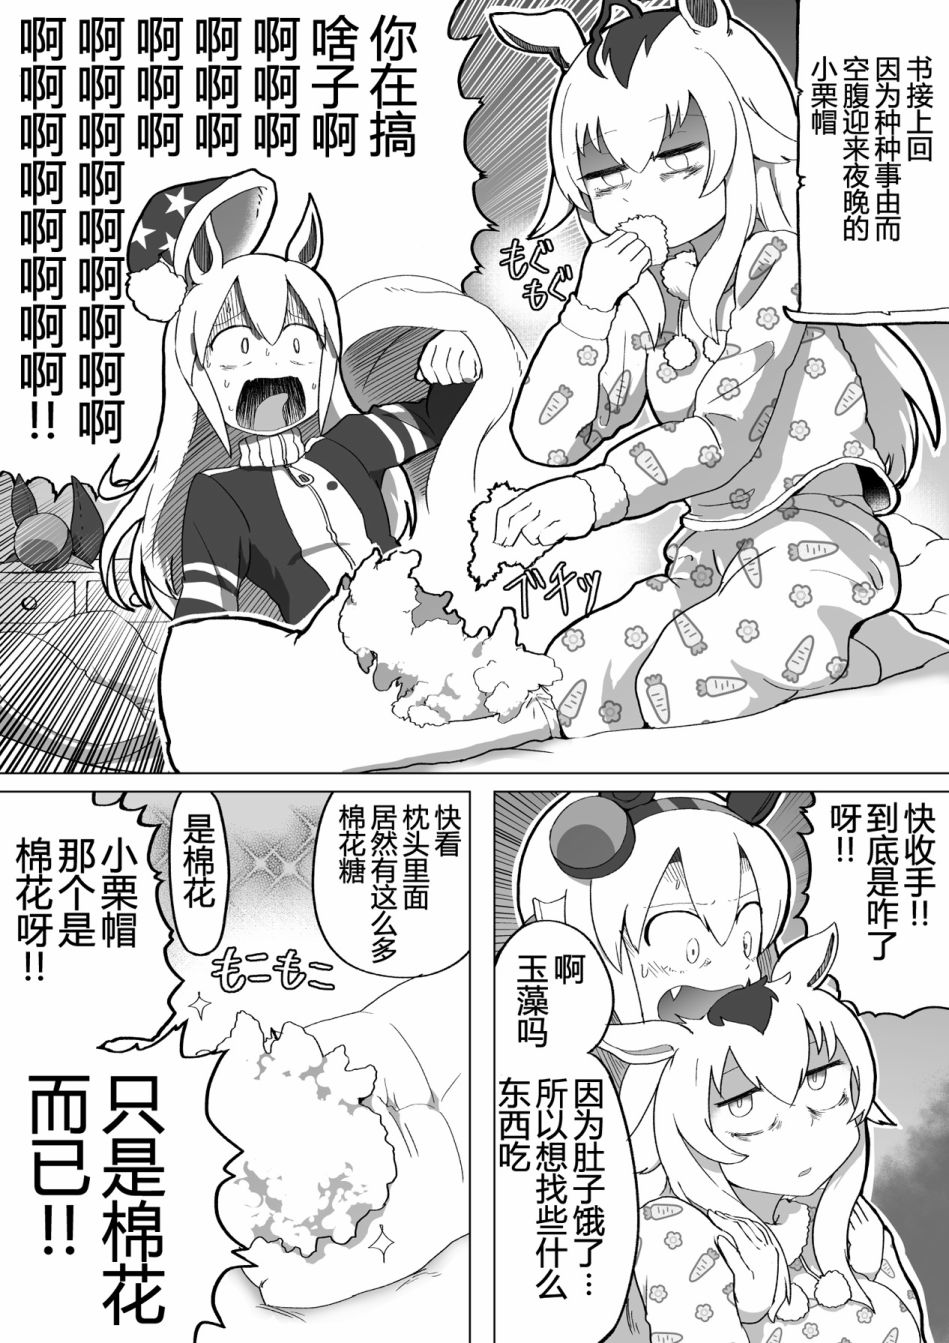 baka-man的賽馬娘漫畫 - 第01話 - 3